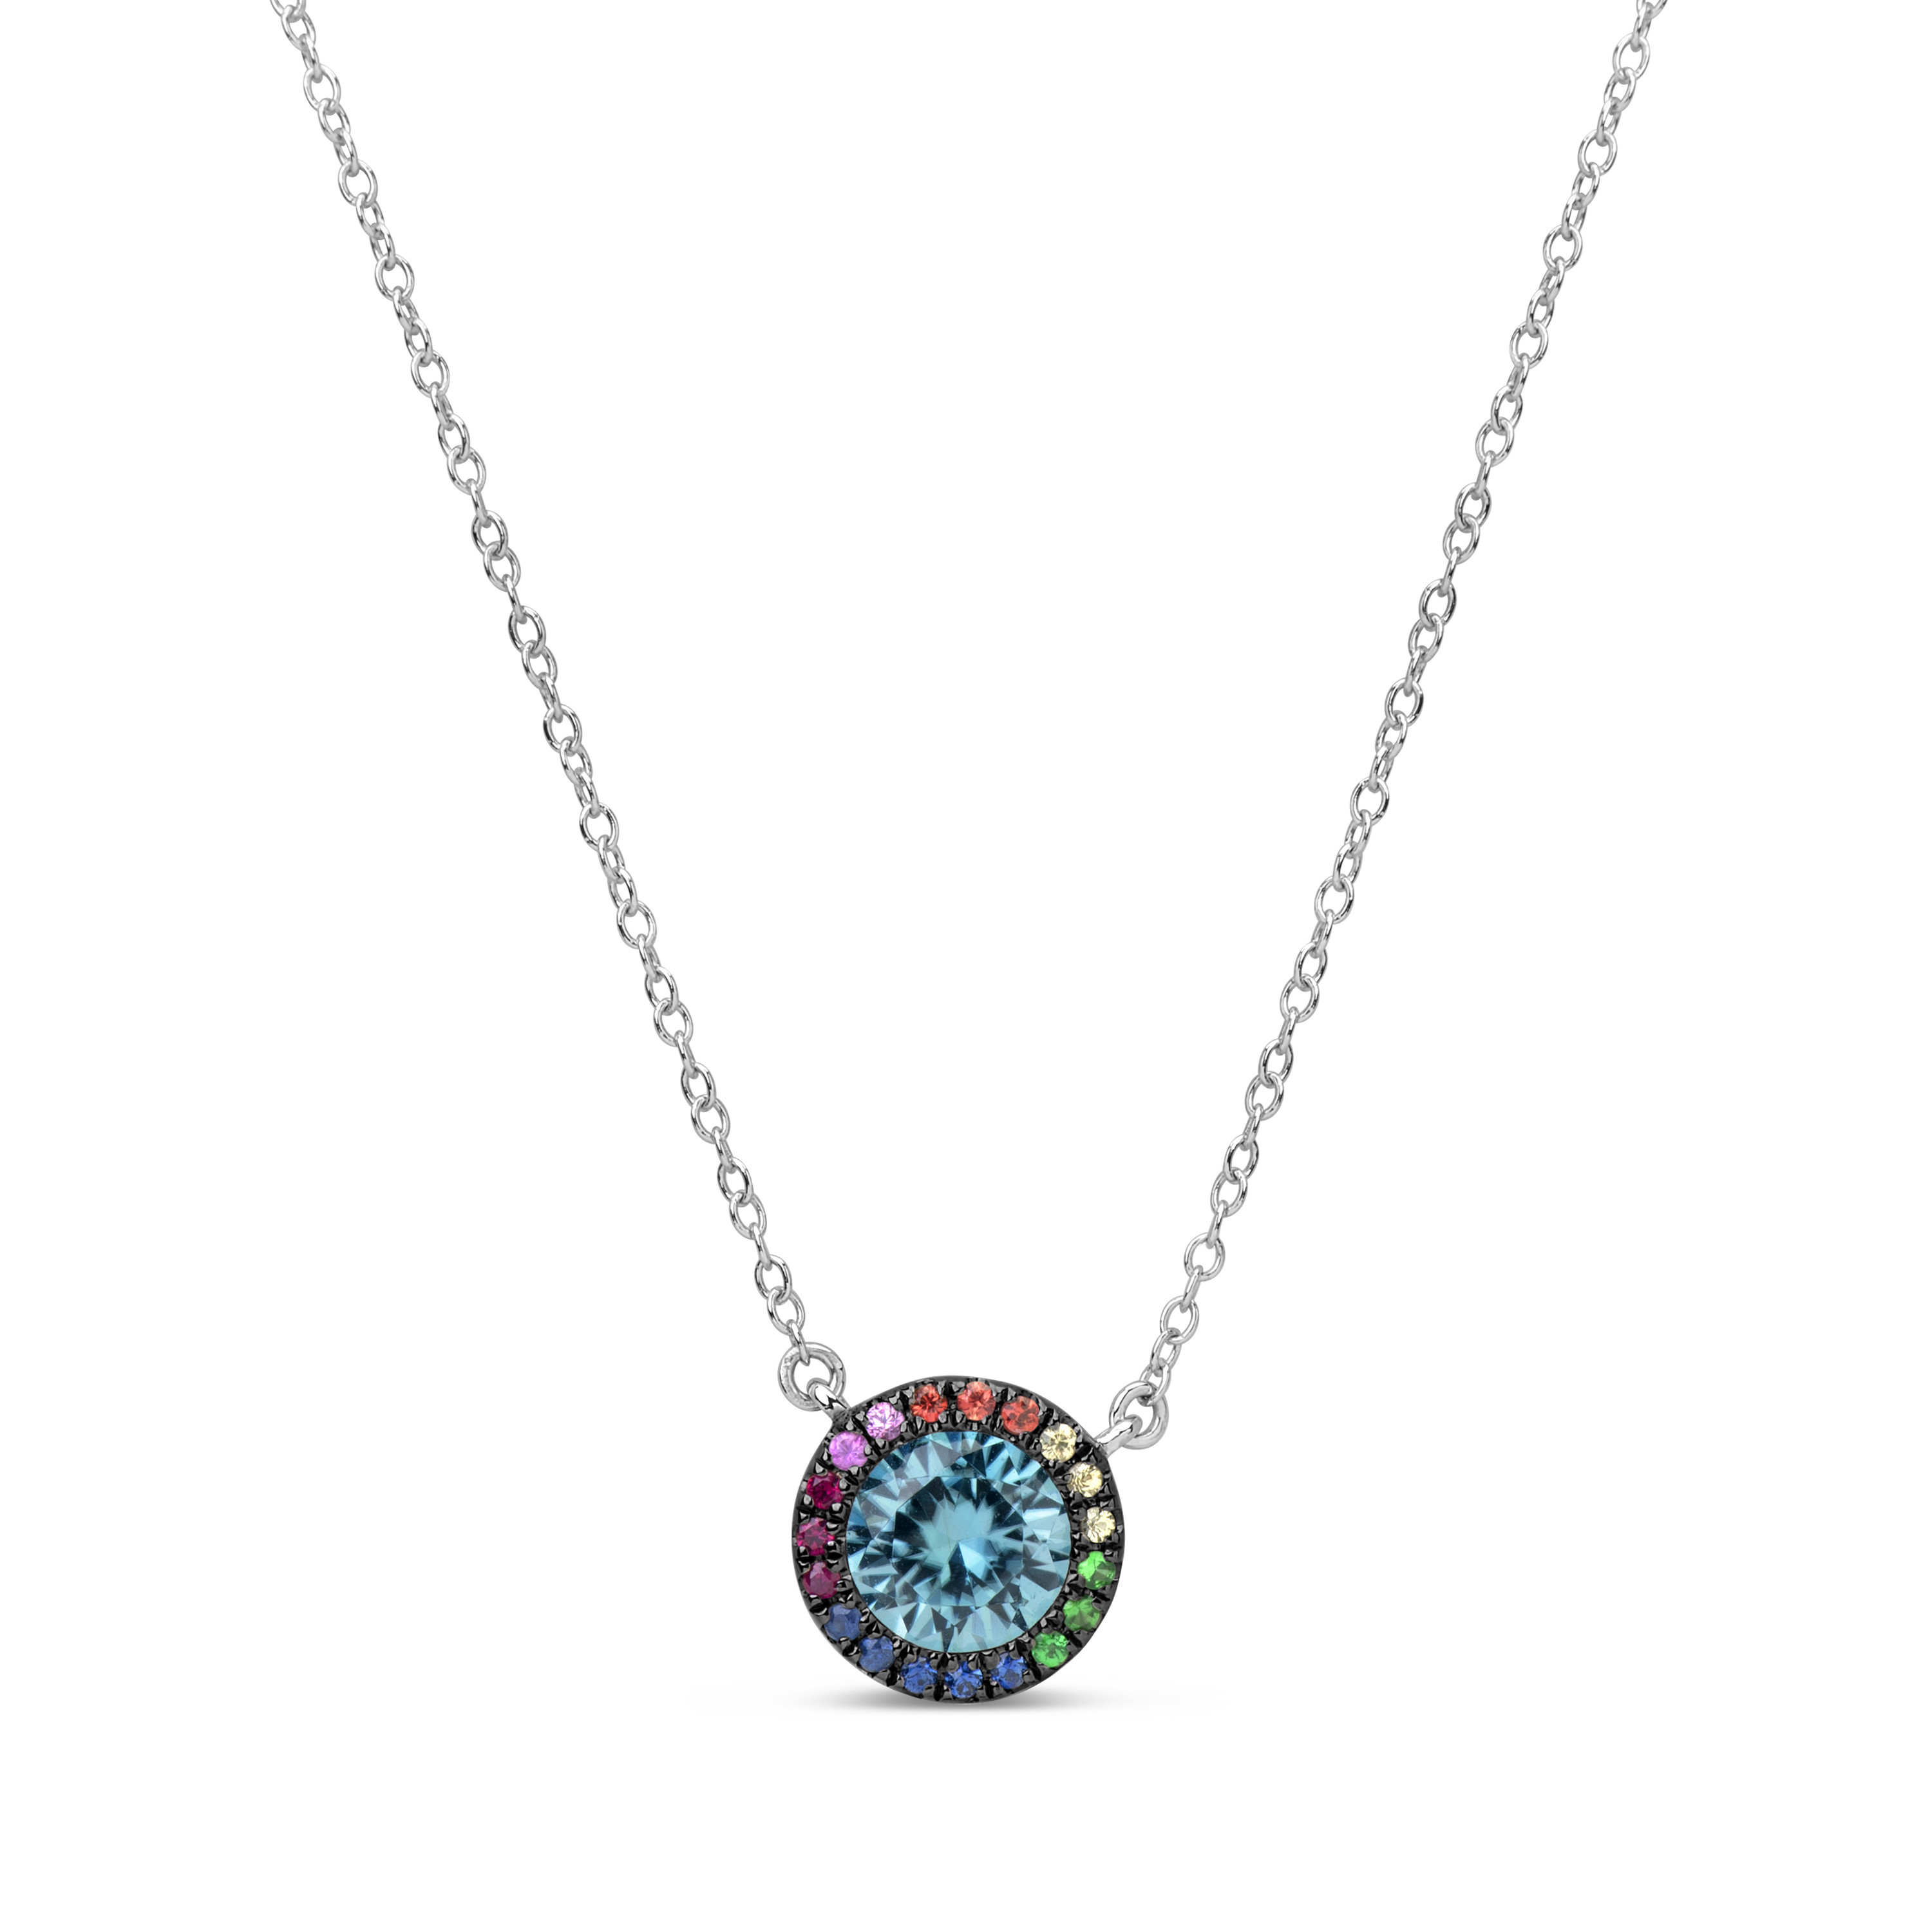 Blue Zircon & Rainbow Sapphire Pendant Necklace